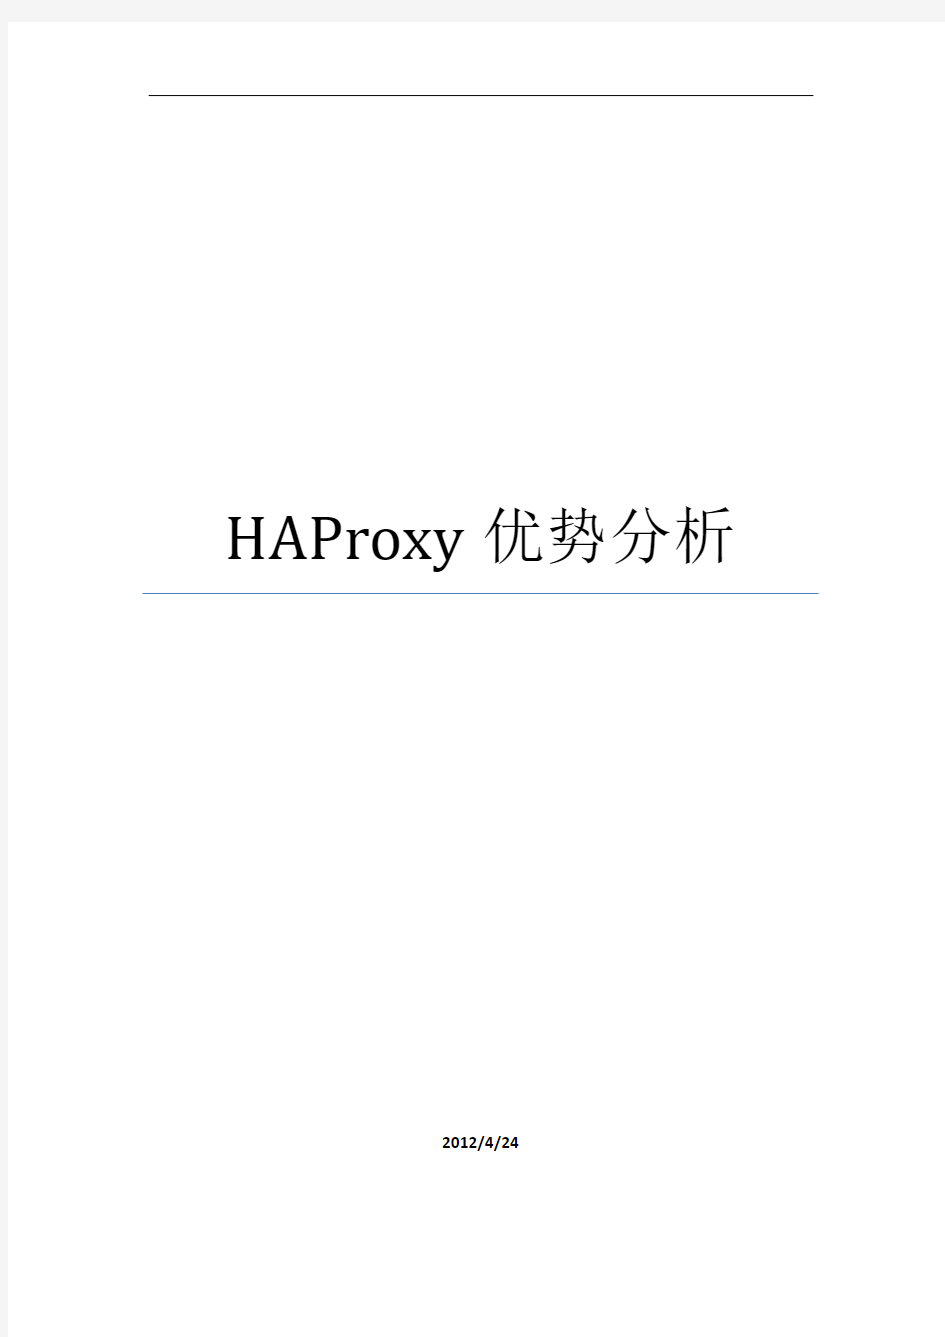 HAProxy优势分析